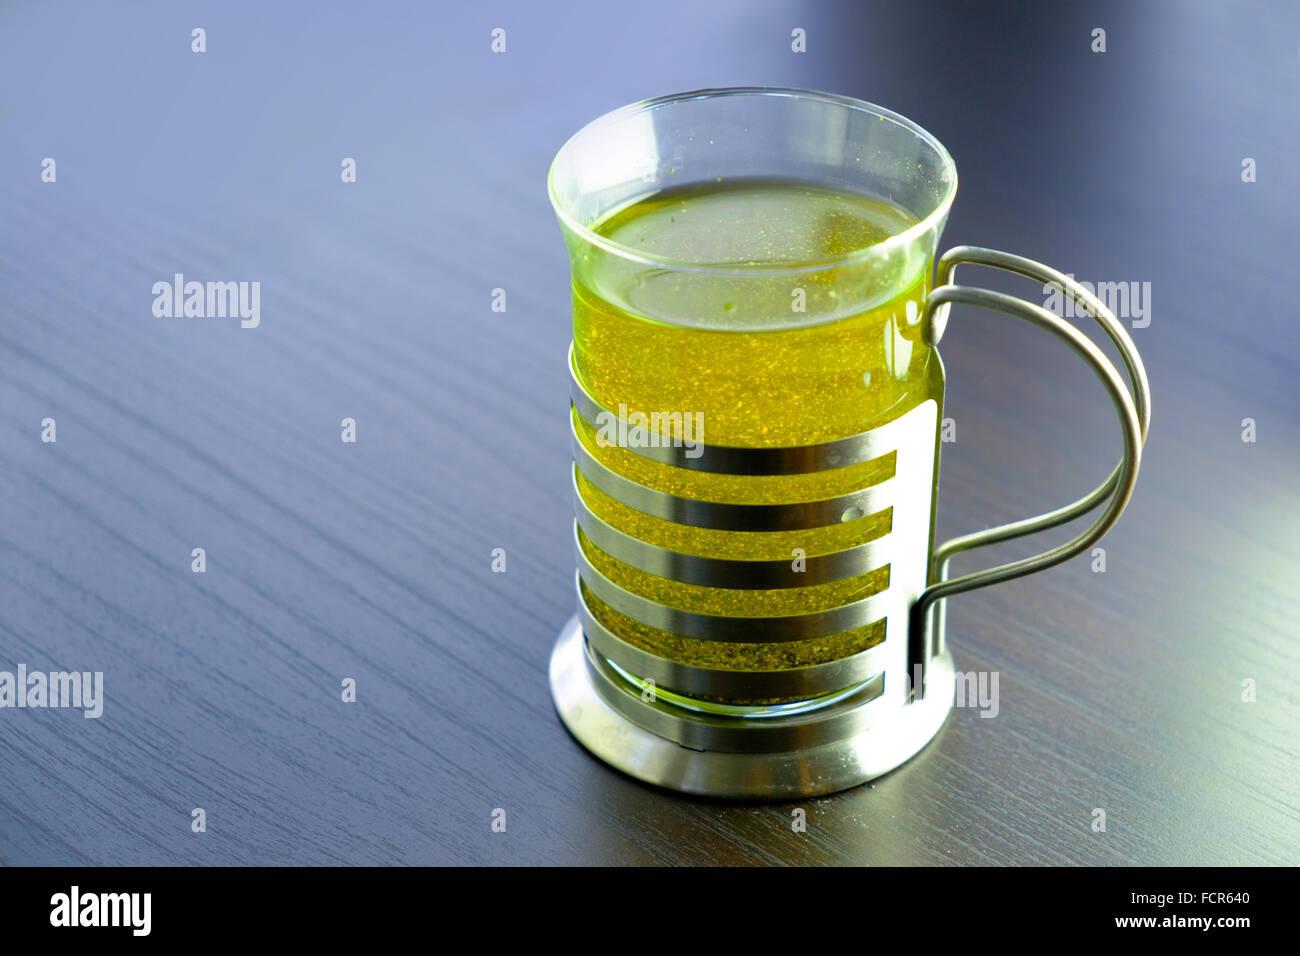 A glass of green herbal tea Stock Photo